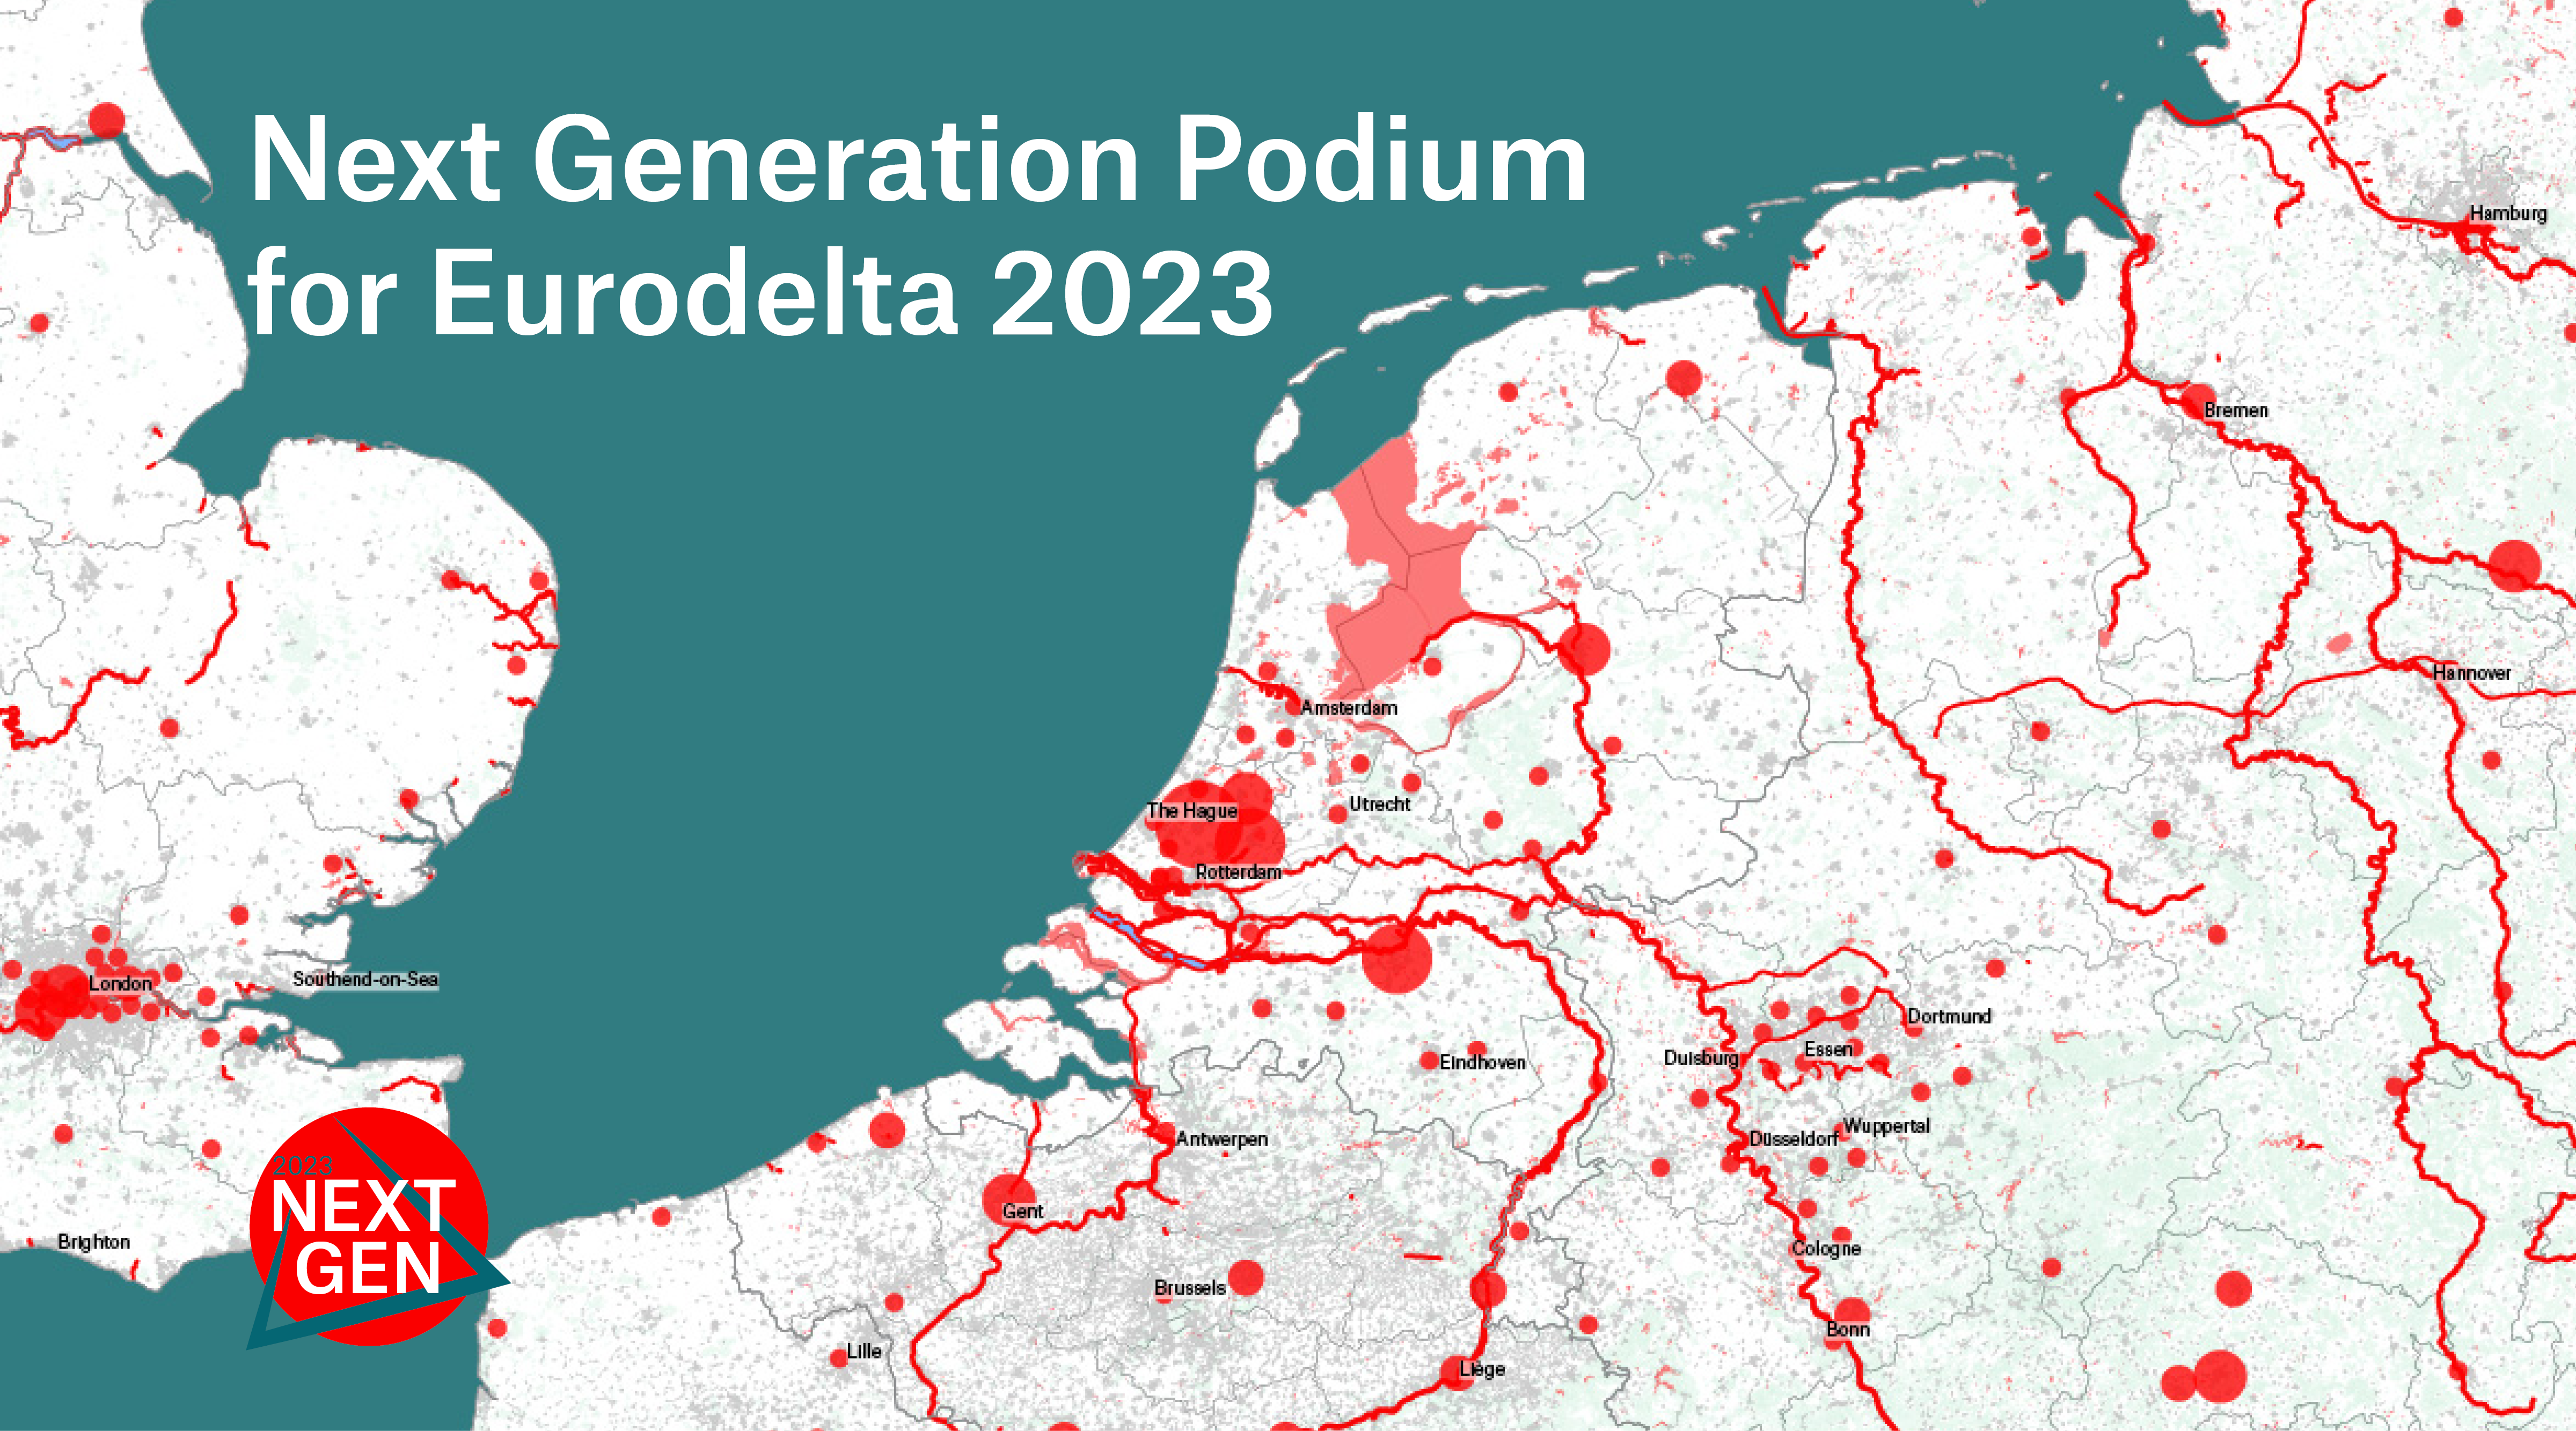 Reflections from Next Generation Podium of Eurodelta 2023